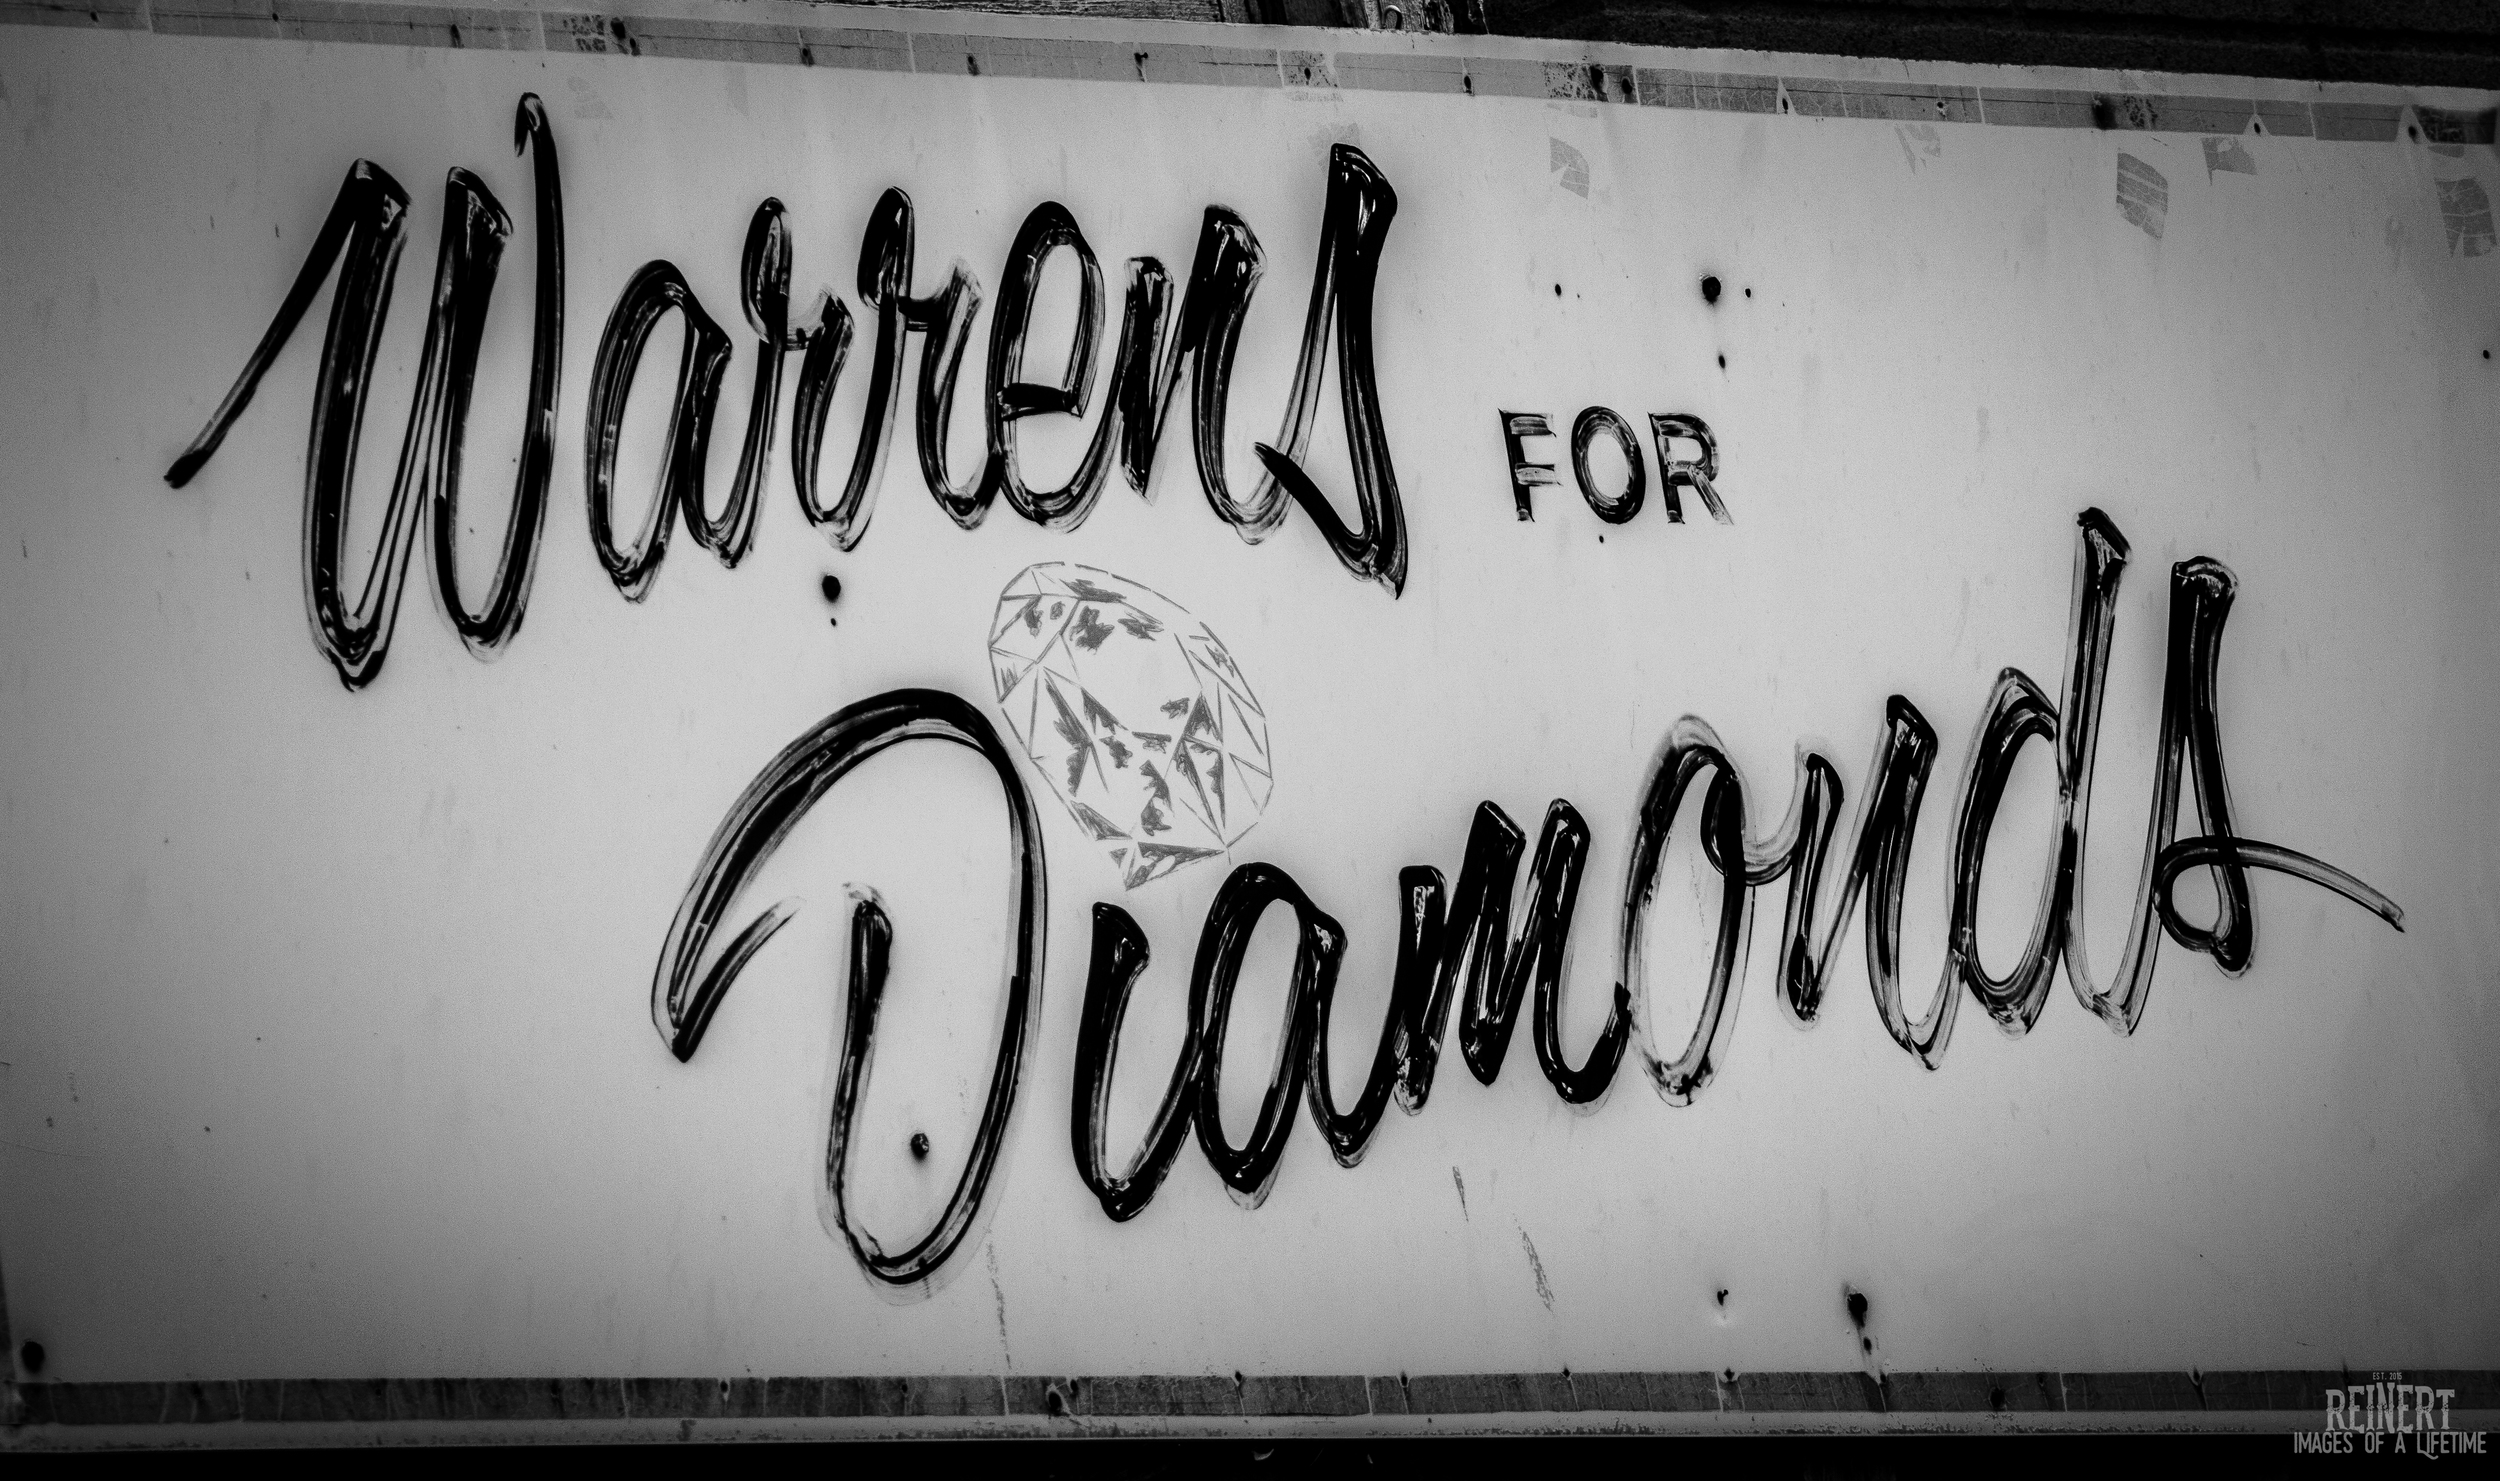 Warrens for Diamonds